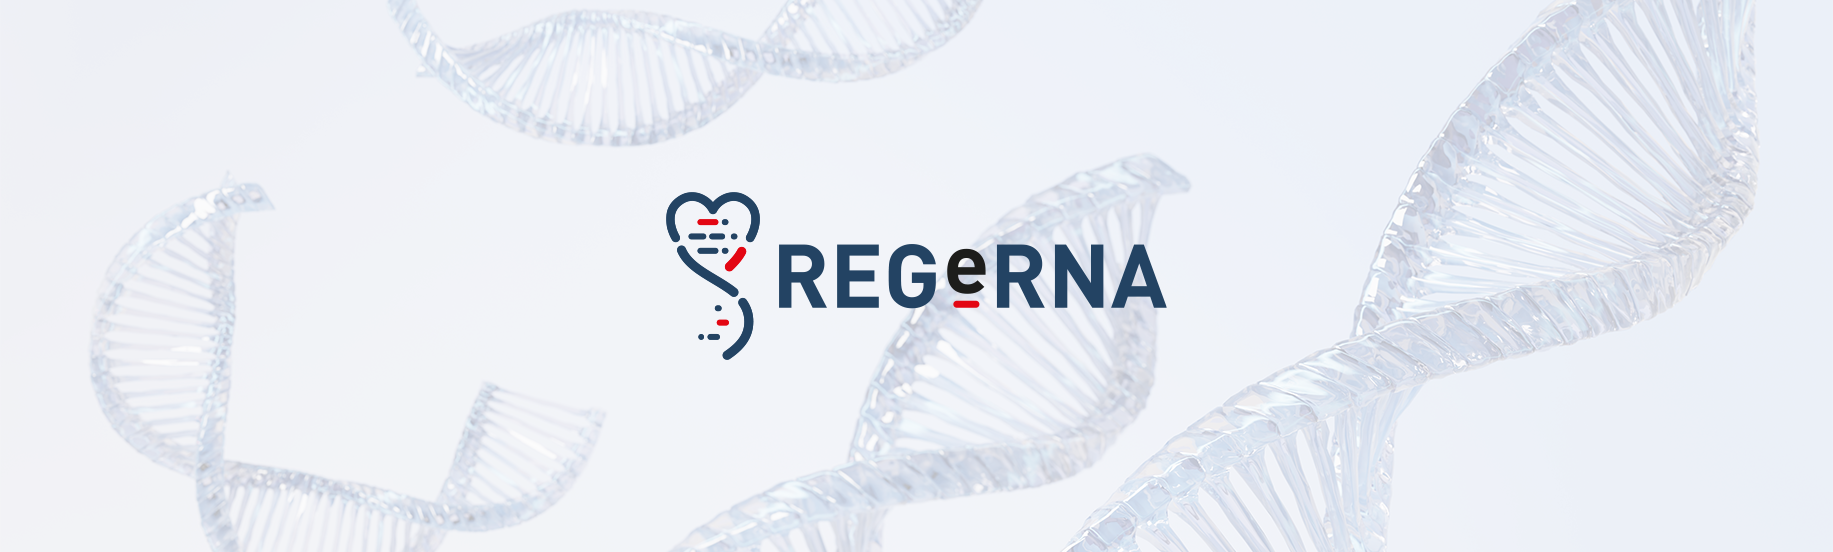 header avec logotype Regerna sur photo d'ADN